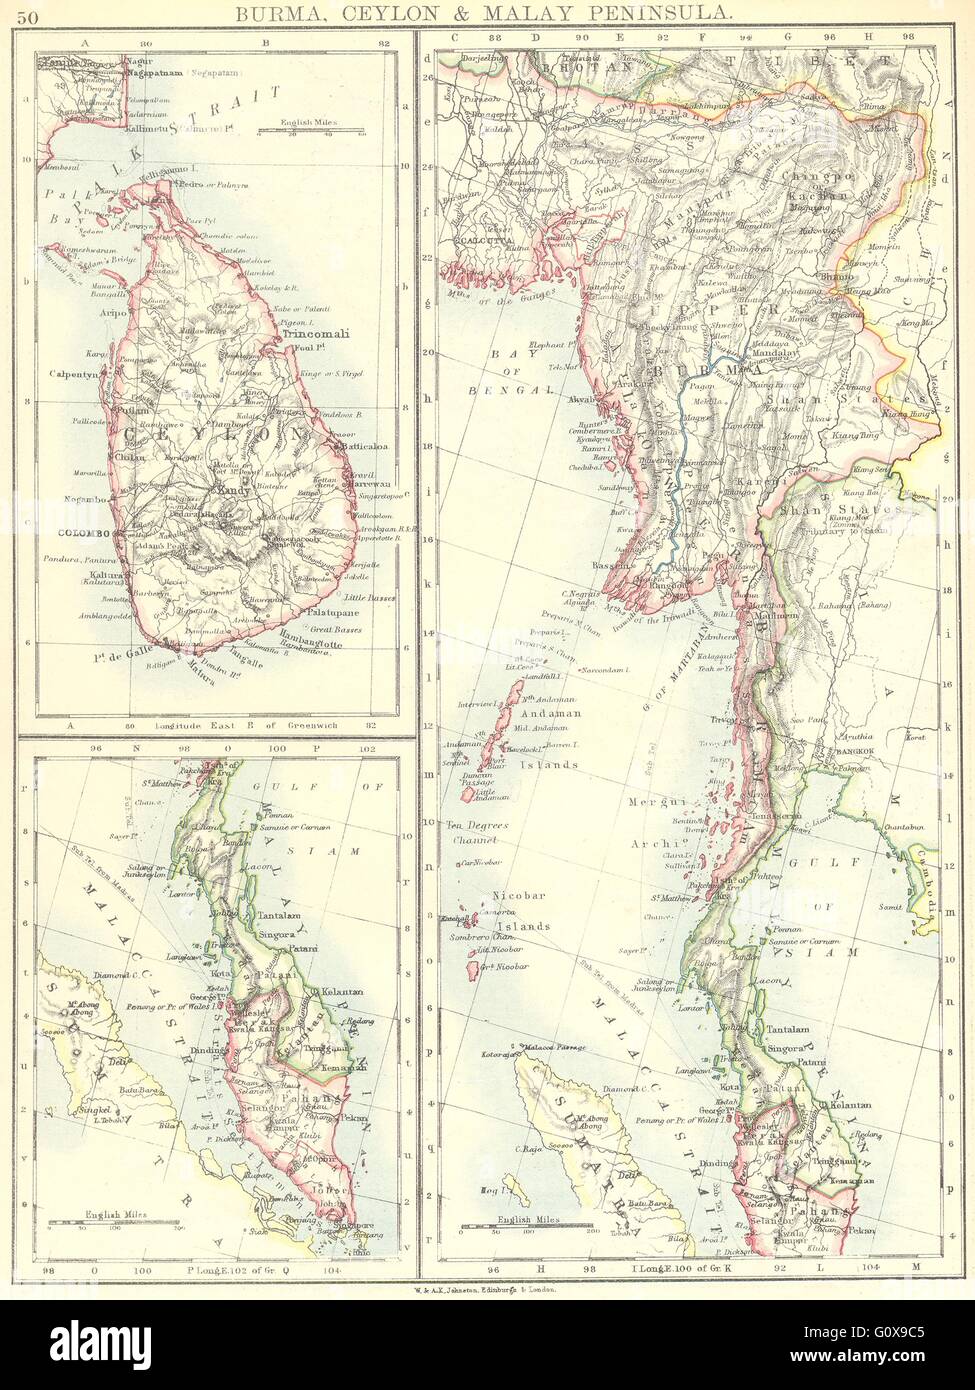 BURMA: Ceylon; Sri Lanka; Malay Peninsula; Singapore, 1897 antique map Stock Photo